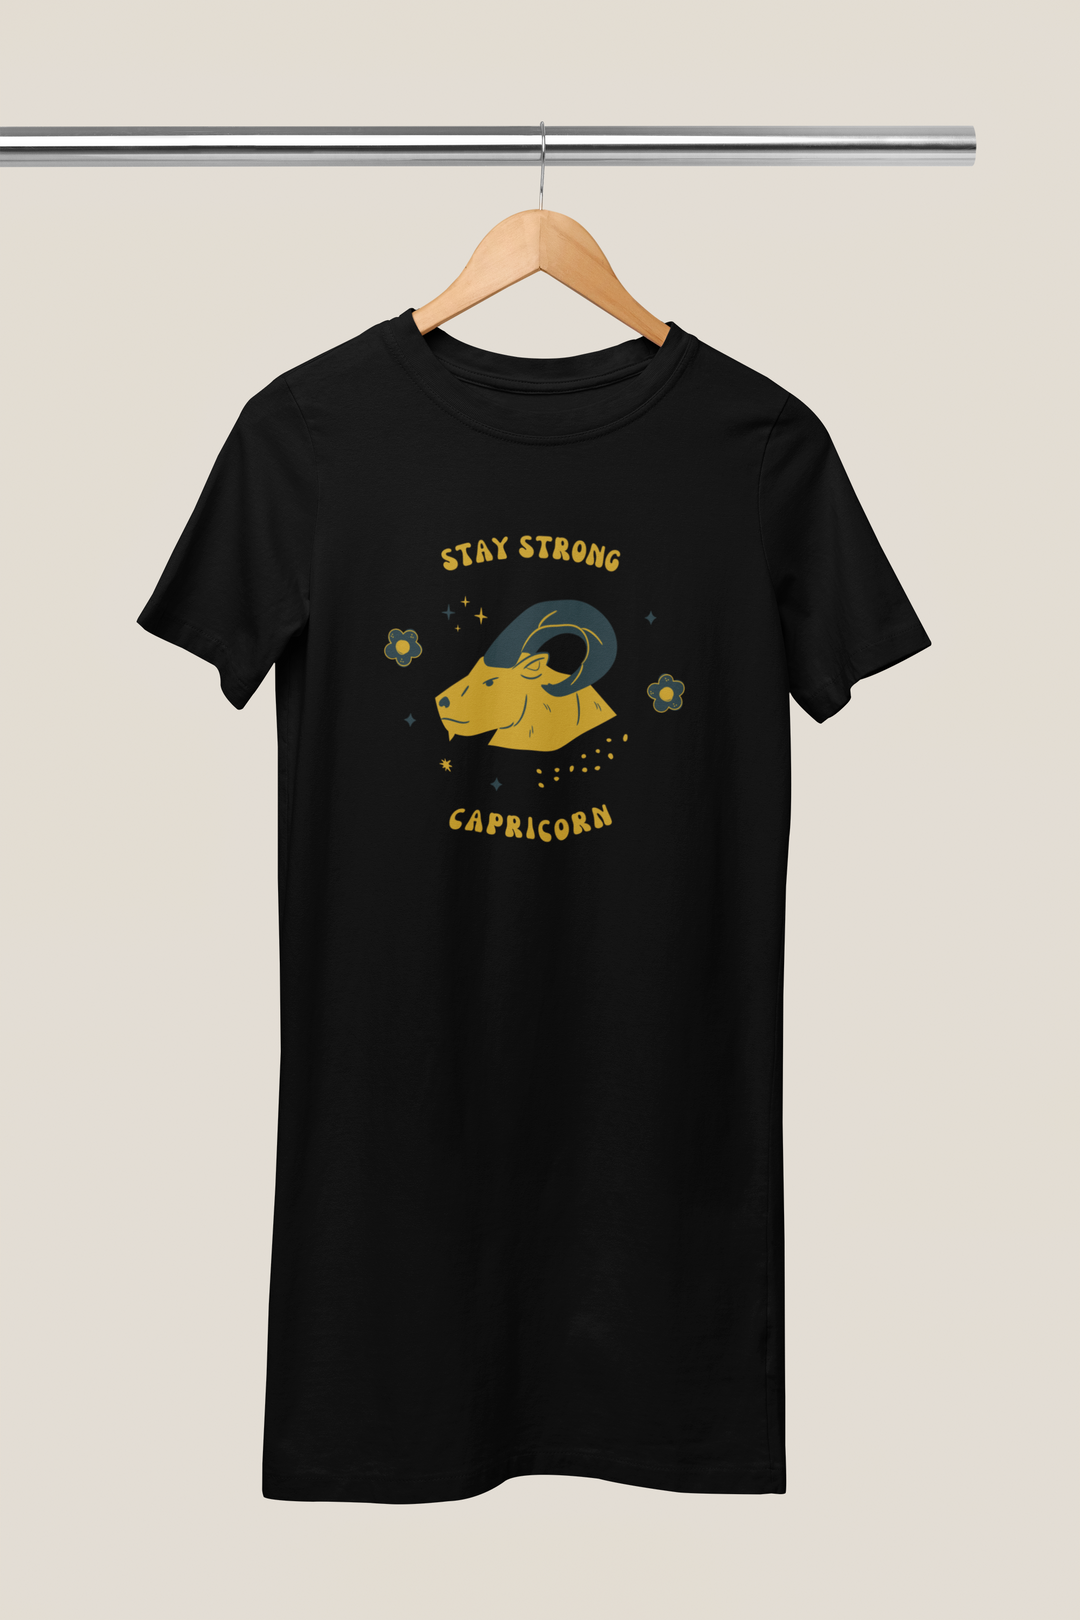 Capricorn Zodiac Stay Strong Printed Cotton Night T-Shirt Dress for Women